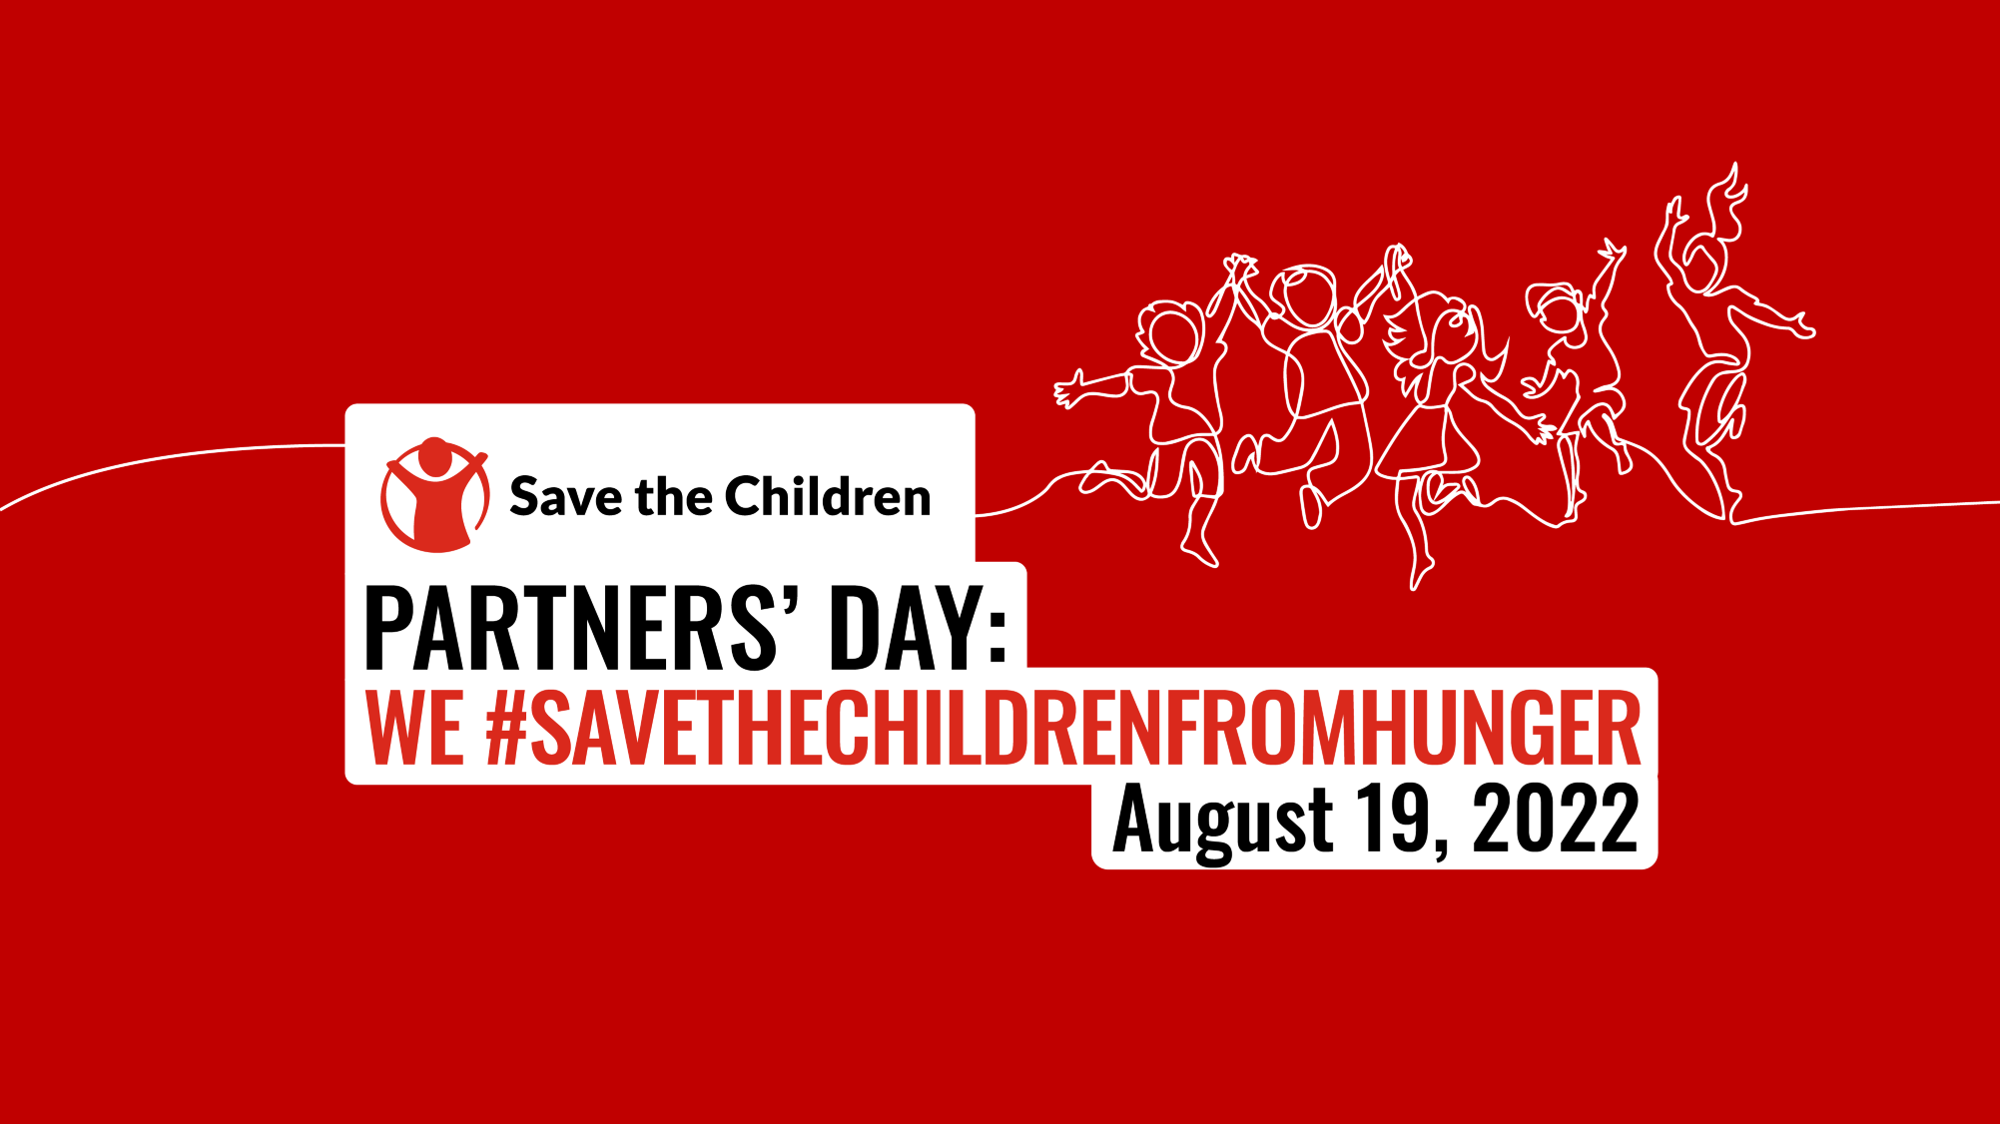 Partners’ Day 2022: We #SavetheChildrenFromHunger